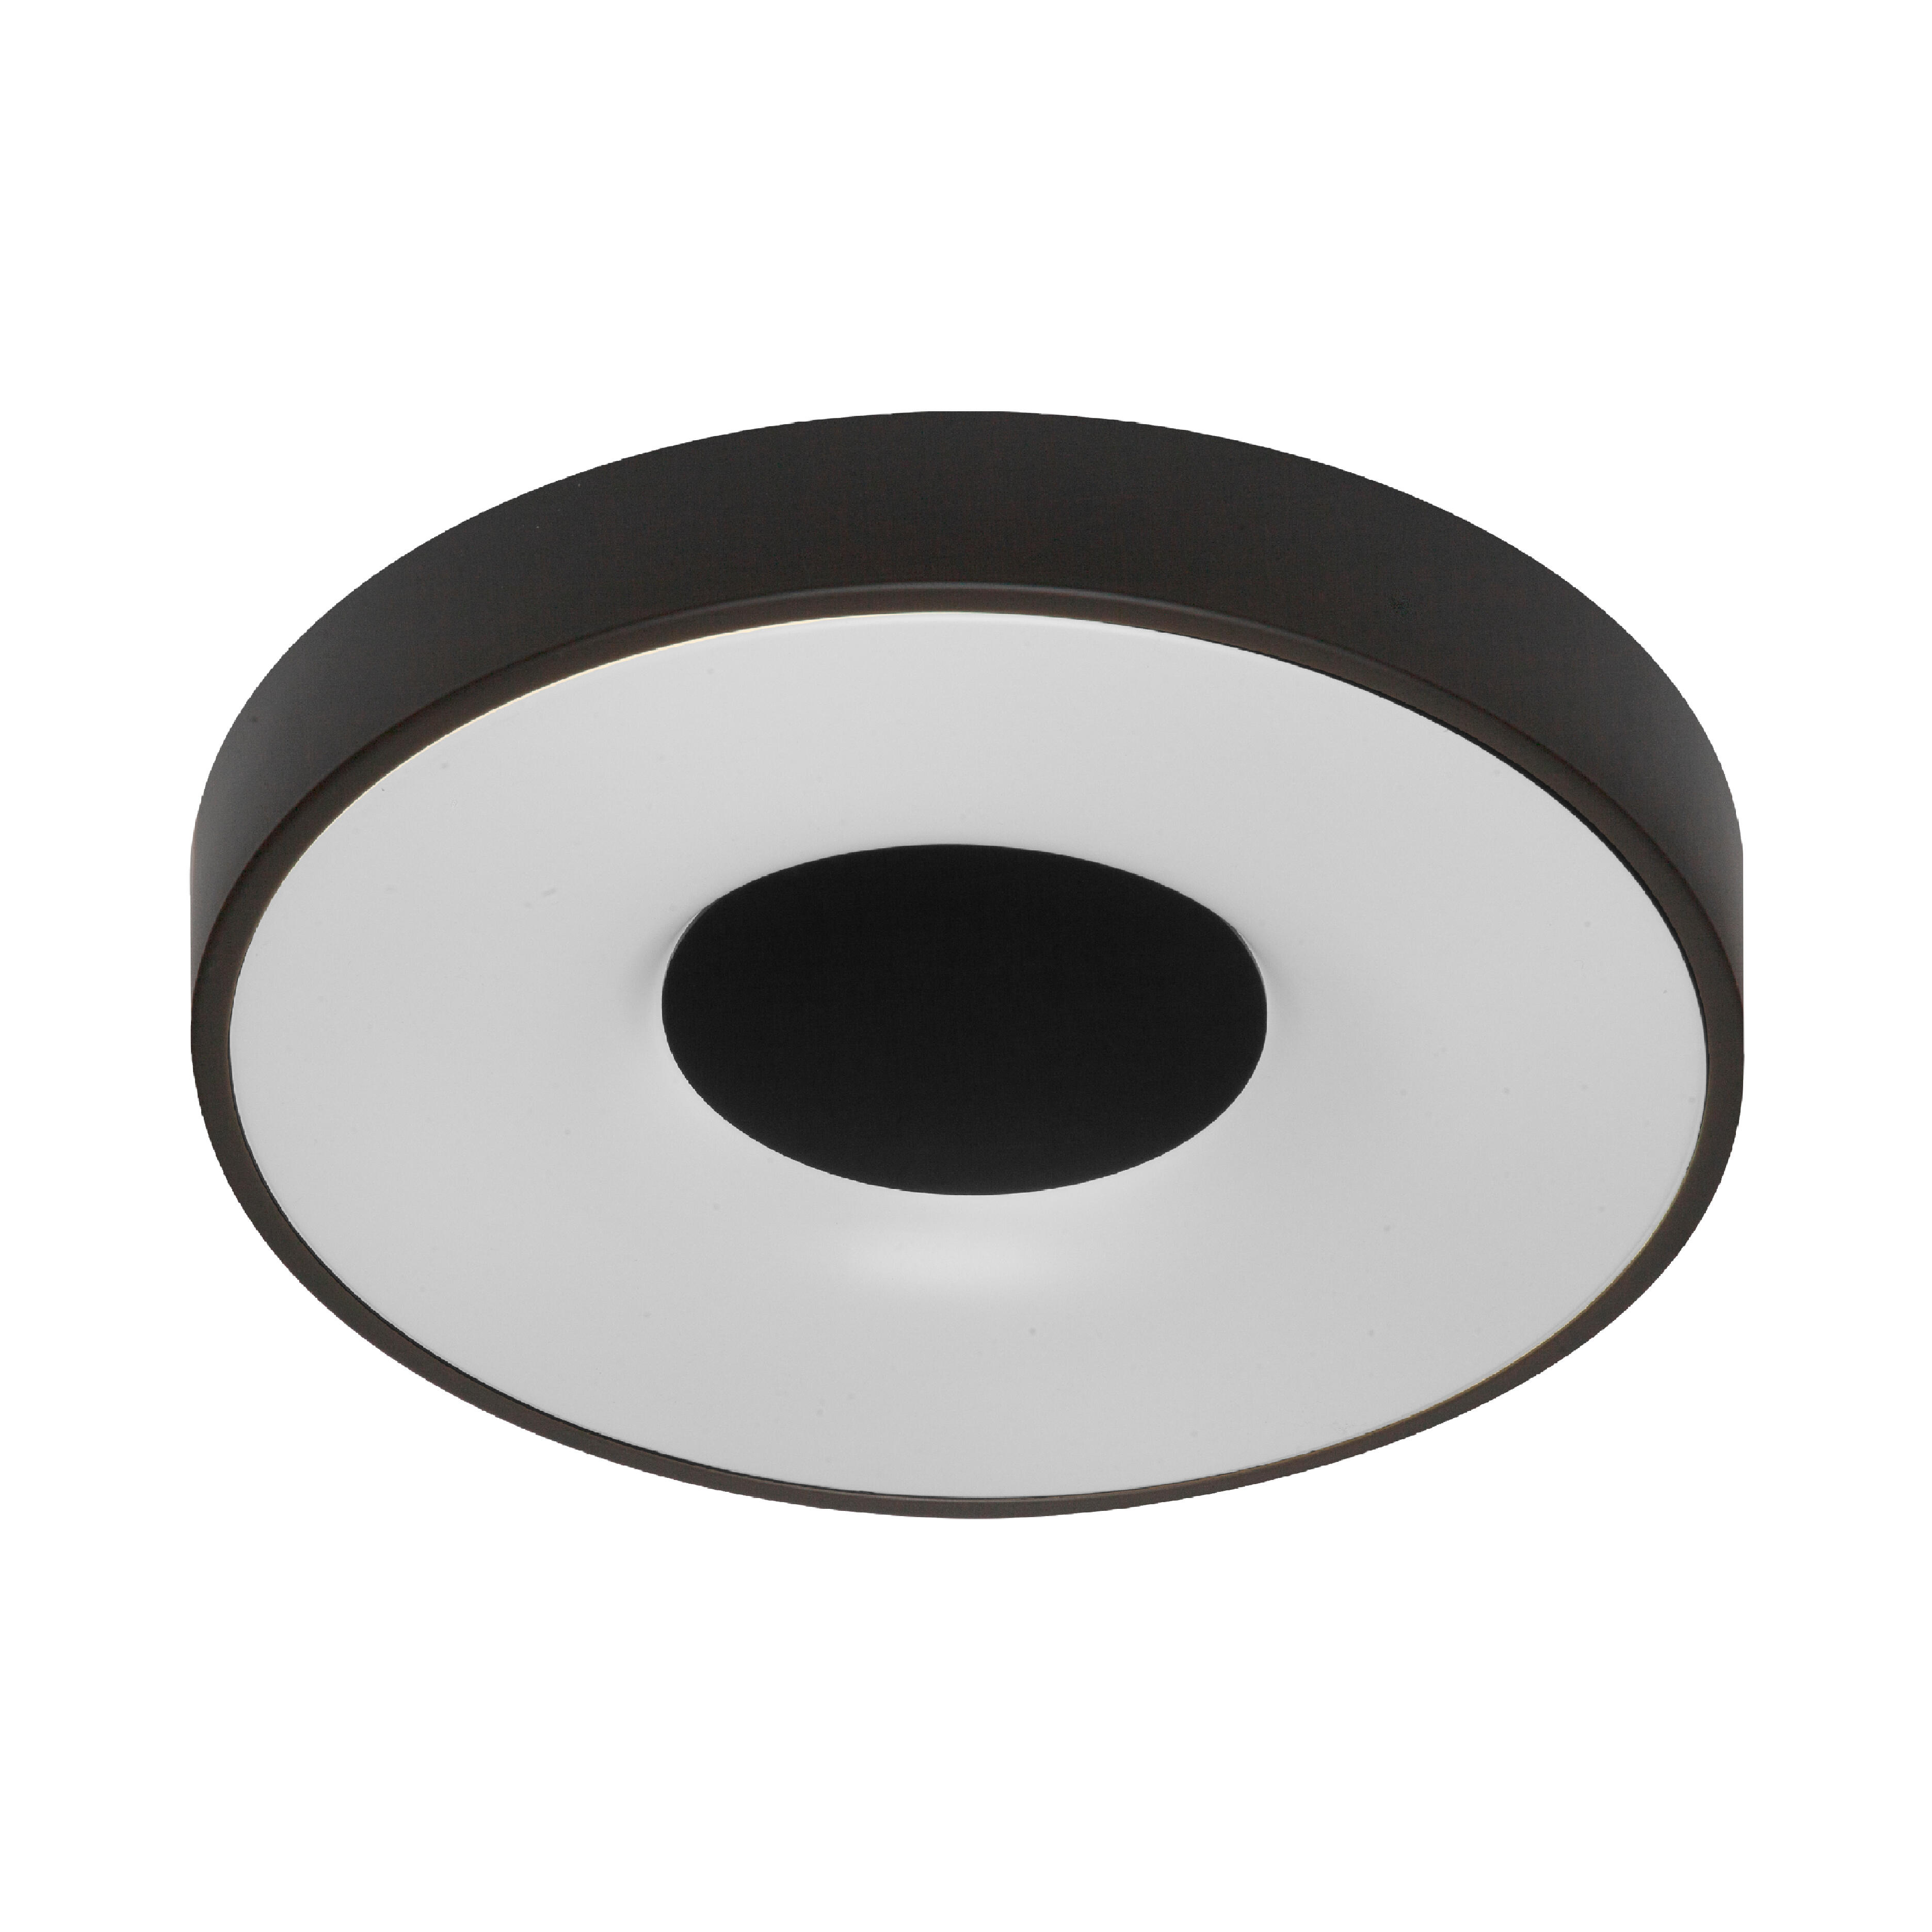 Plafon led negro 80w,3900lm,intensidad y tono regulable(2700-5000k) 50cm,mando